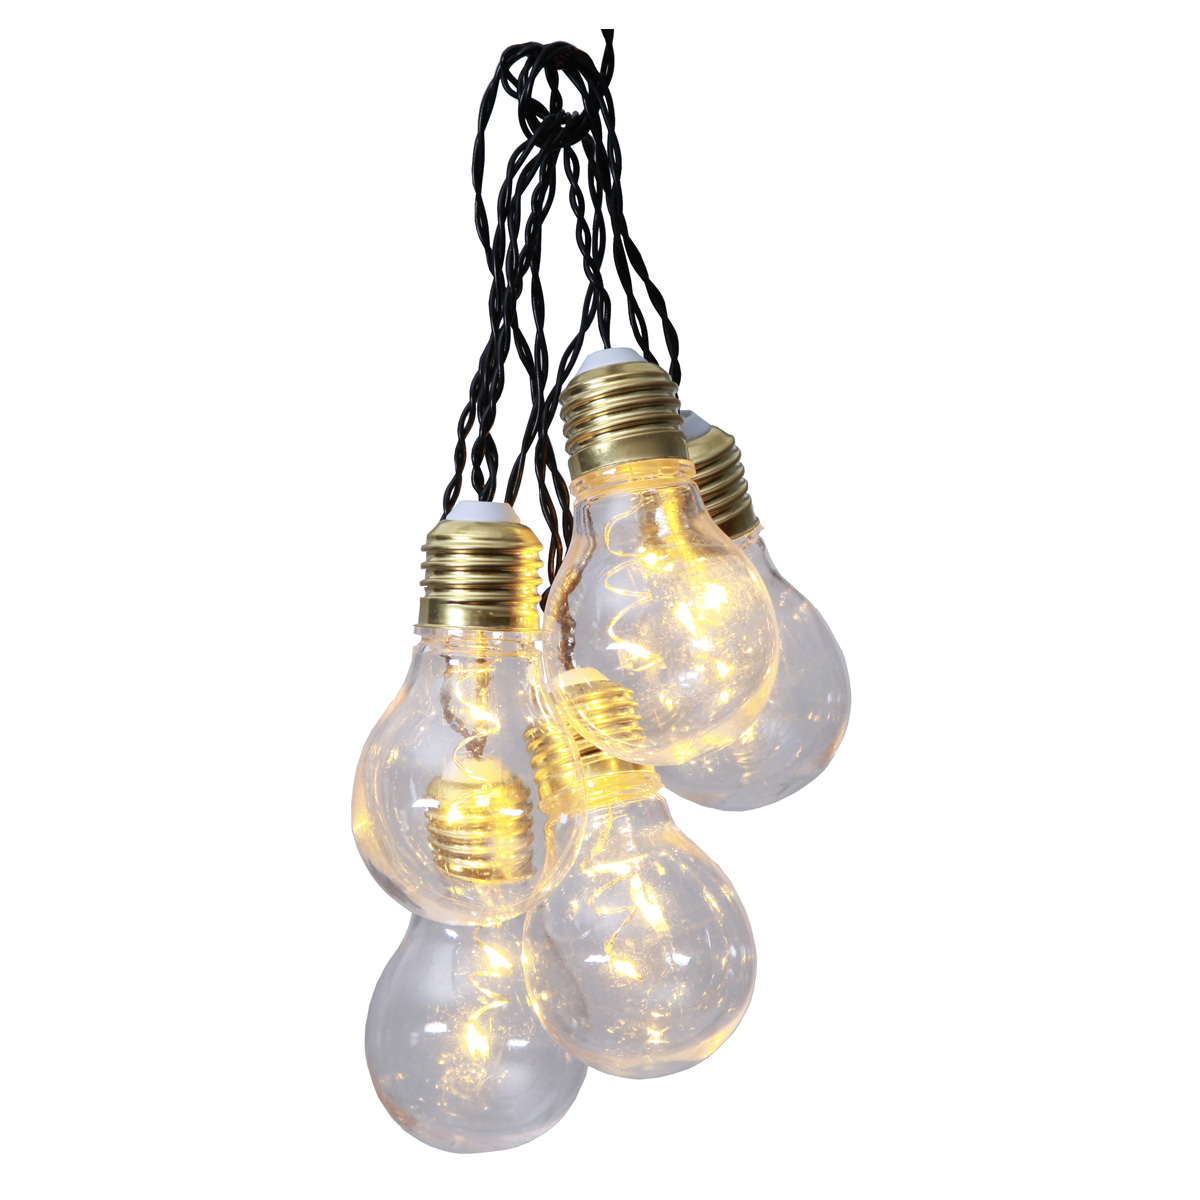 2x LED Zieh-Lampe Lila Glüh-Birne Zelt-Lampe Camping-Lampe Party-Lichterkette 